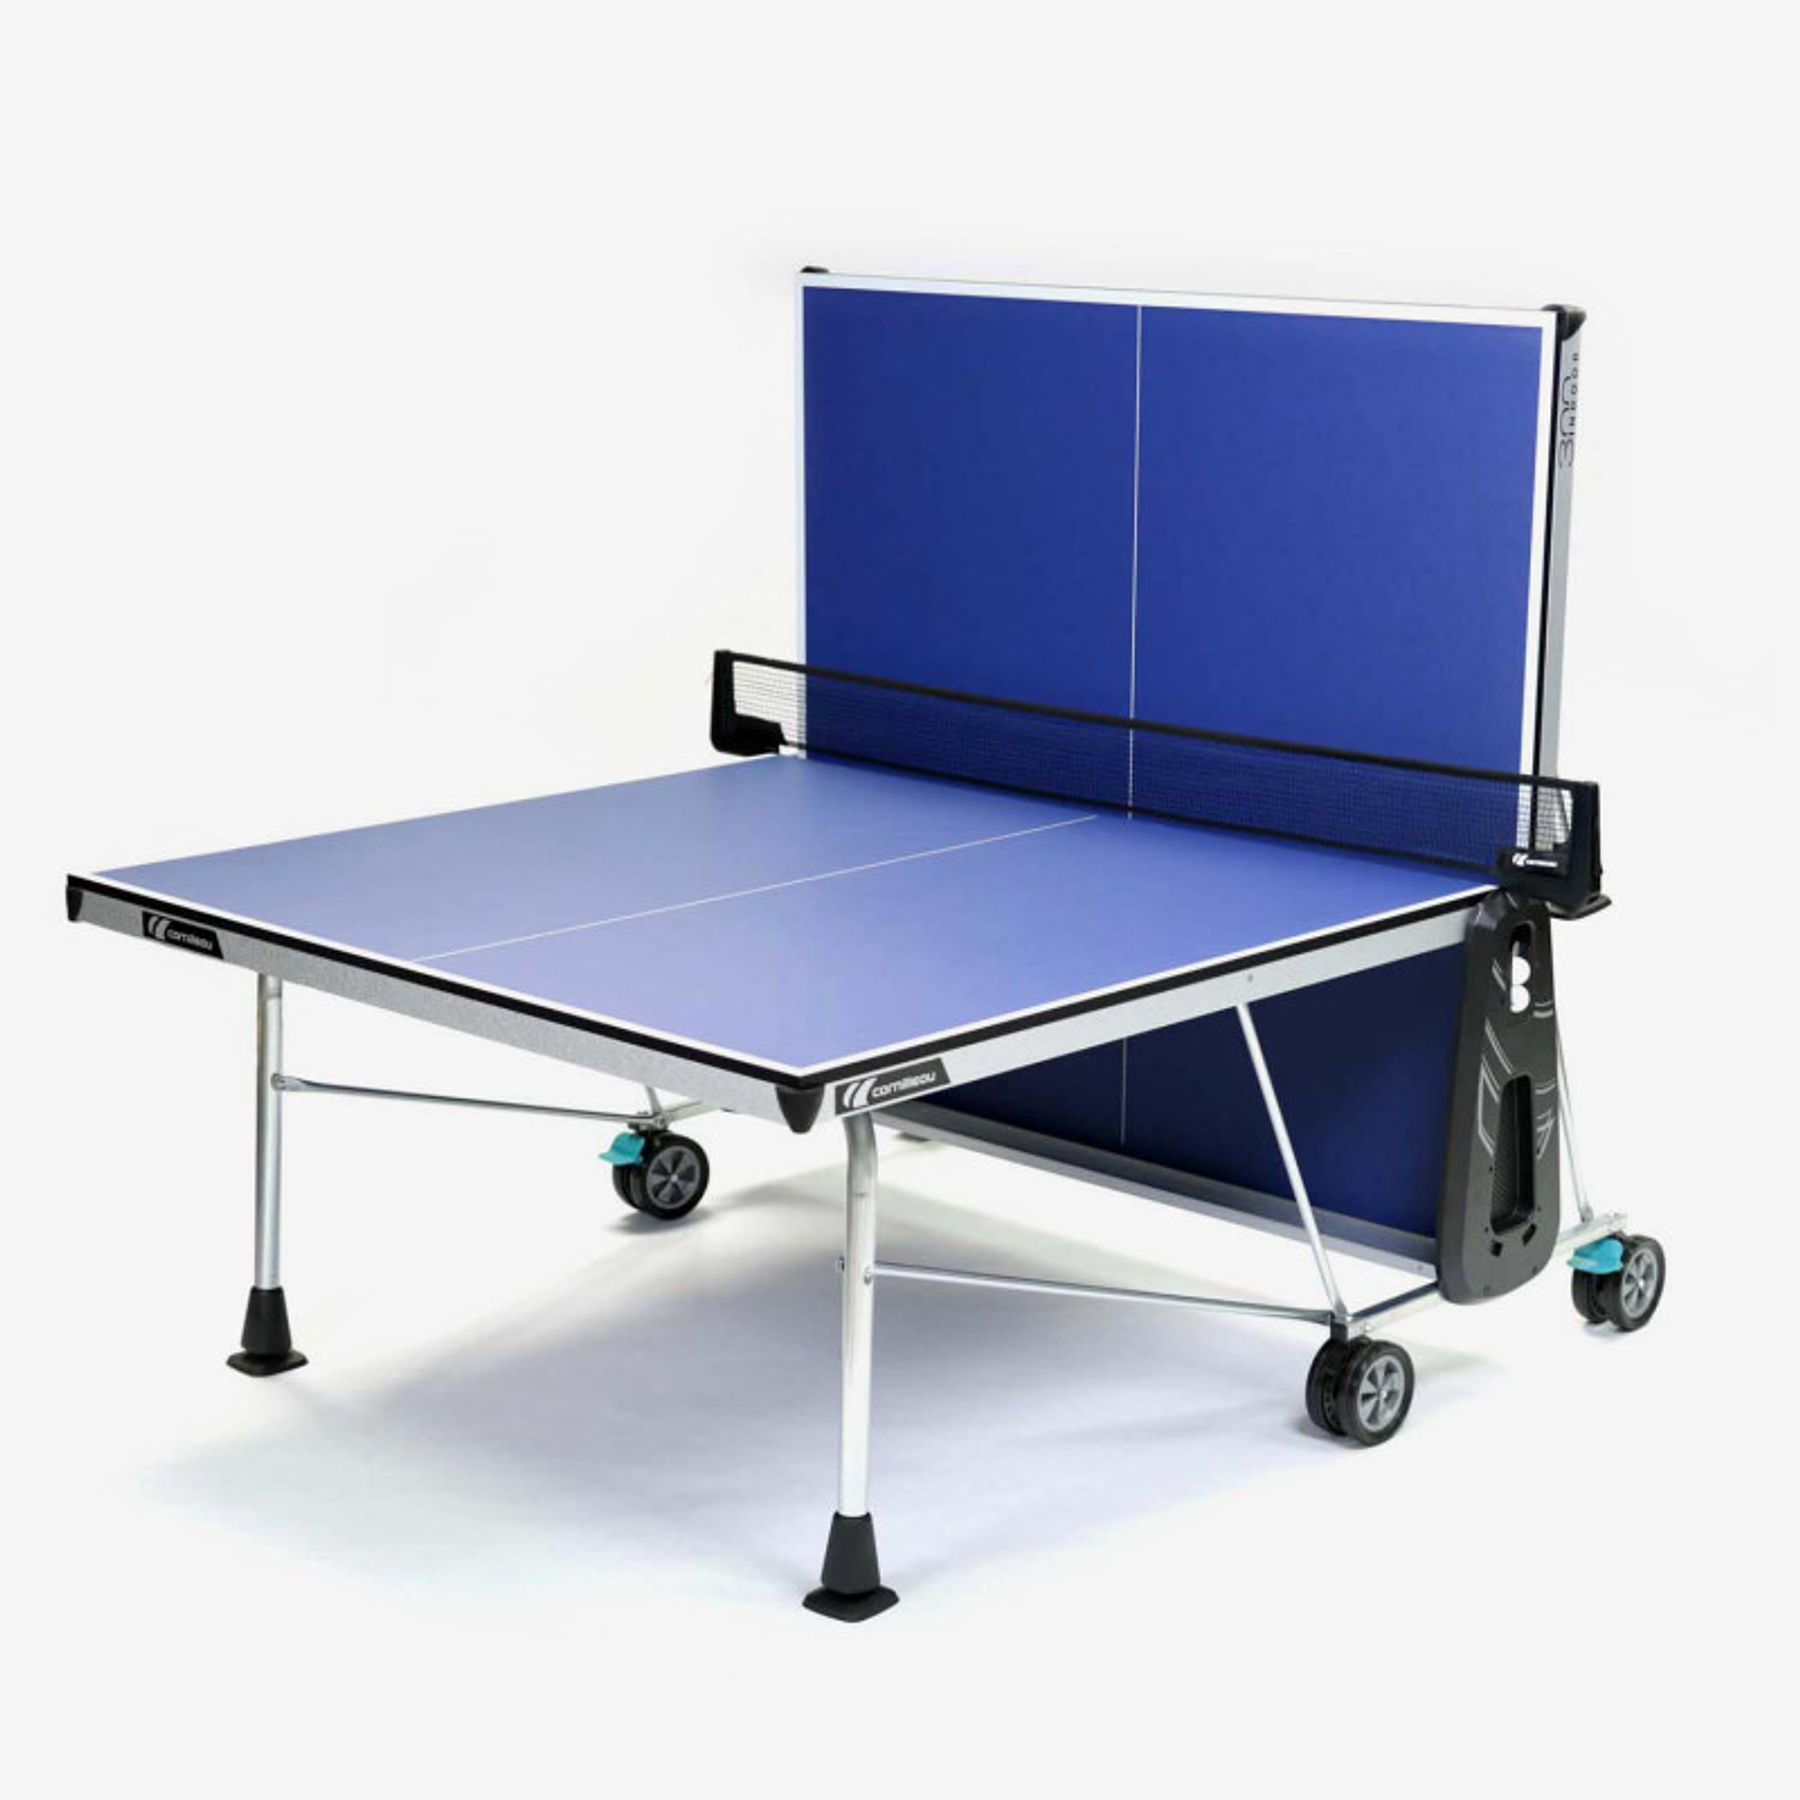 Cómo elegir tu mesa de ping-pong? - Cornilleau